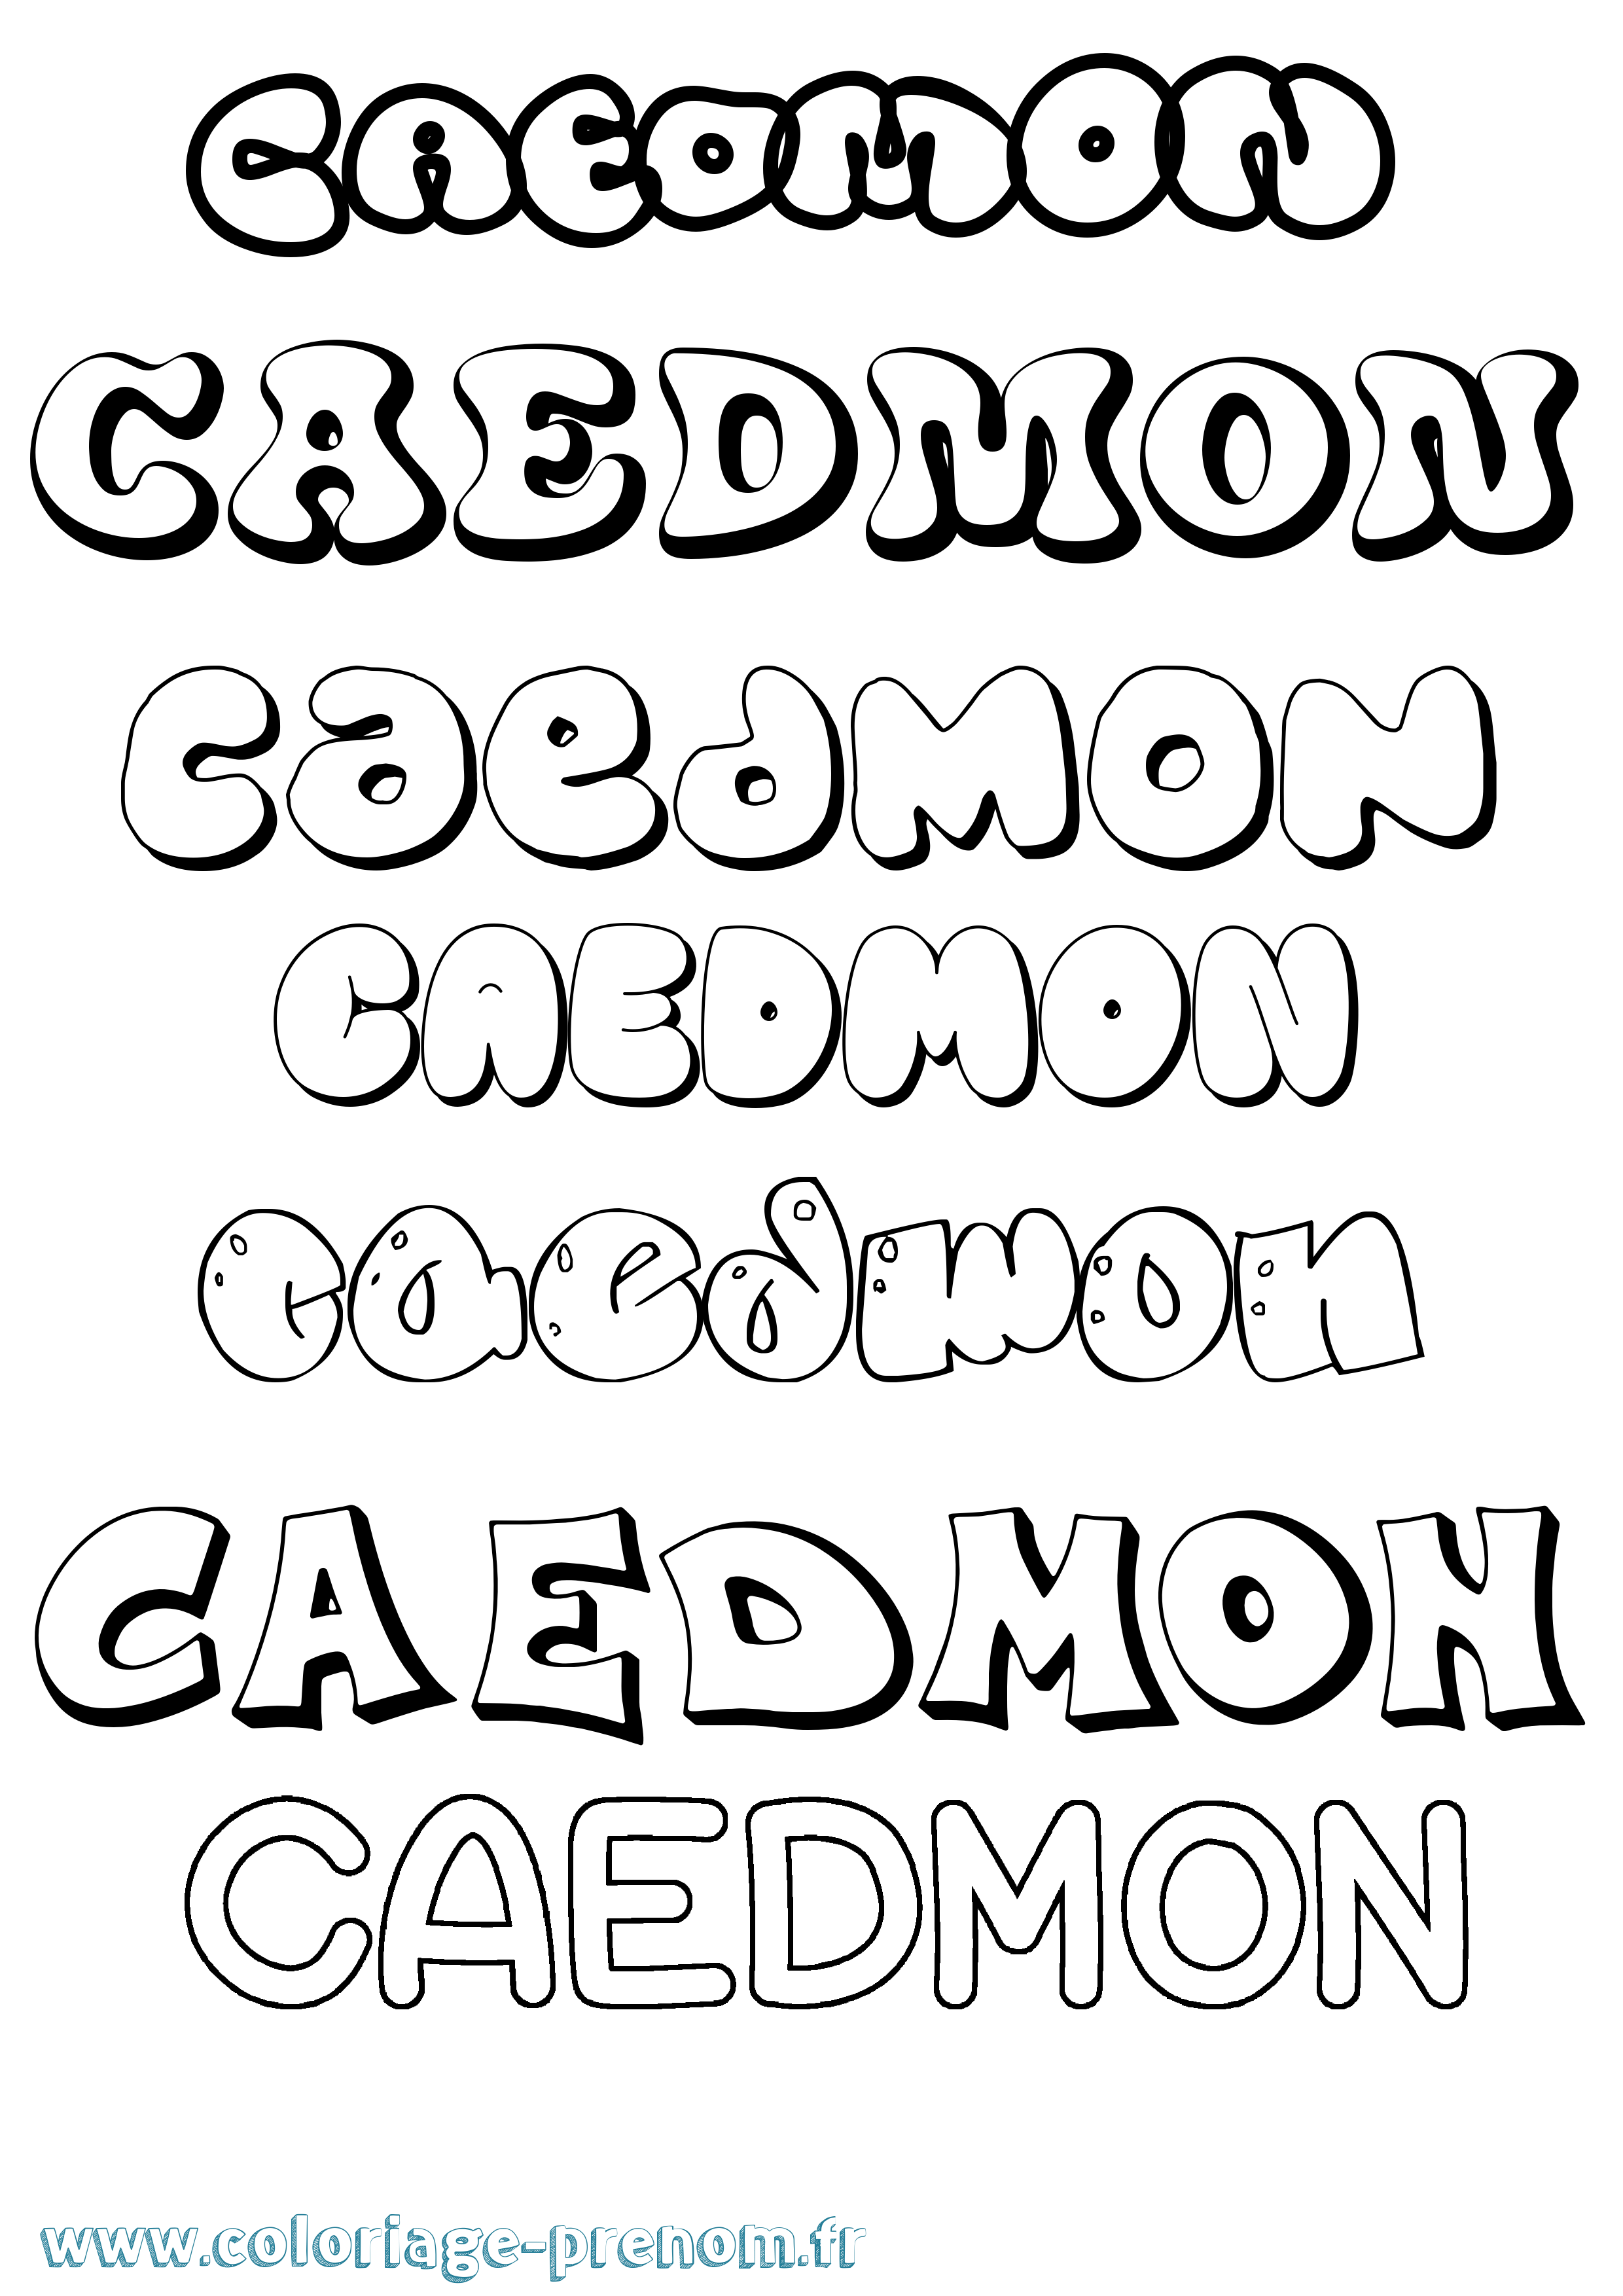 Coloriage prénom Caedmon Bubble